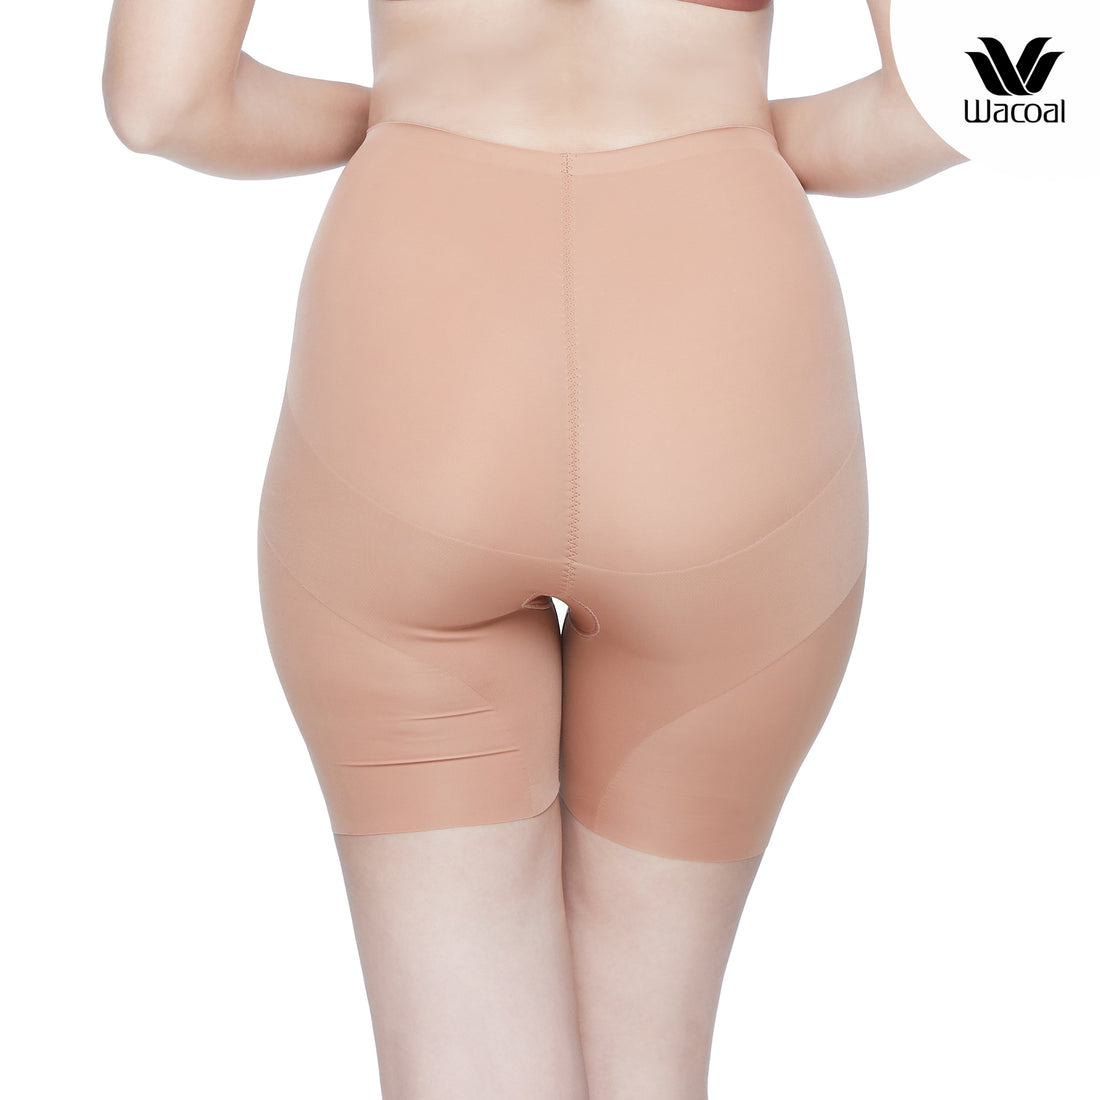 Wacoal Shape Beautifier Hips กางเกงเก็บกระชับแบบขายาว รุ่น WY1617 สีส้มอิฐ (BN)